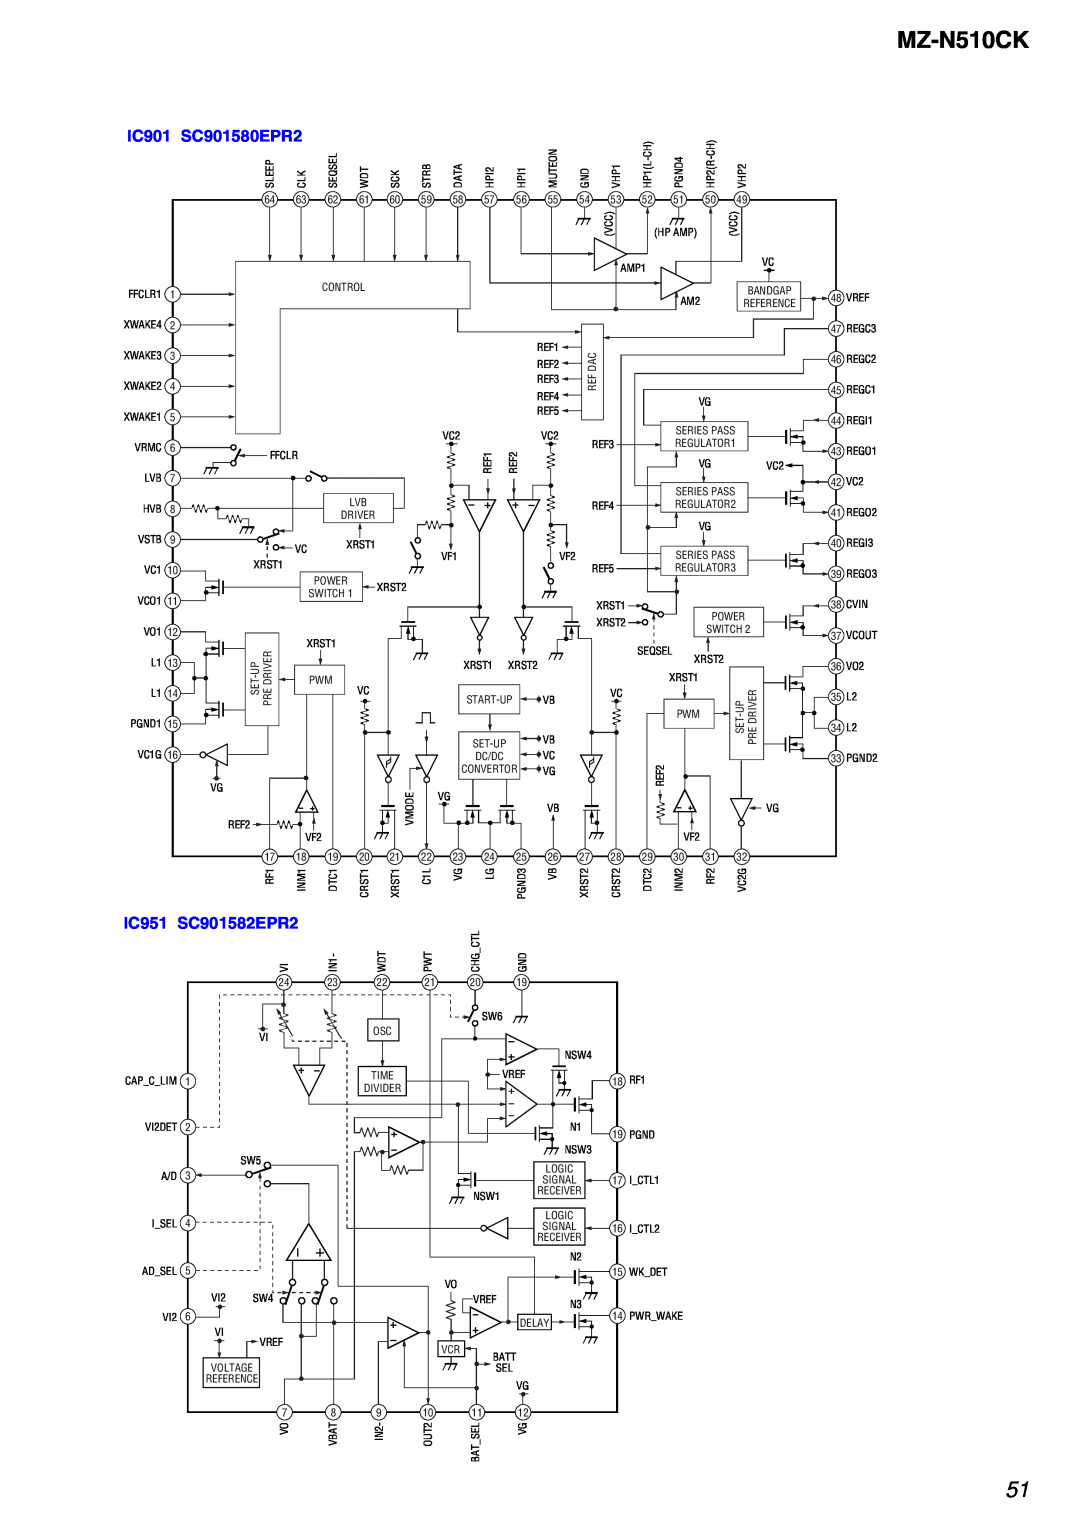 Sony MZ-N510CK service manual IC901 SC901580EPR2, IC951 SC901582EPR2 